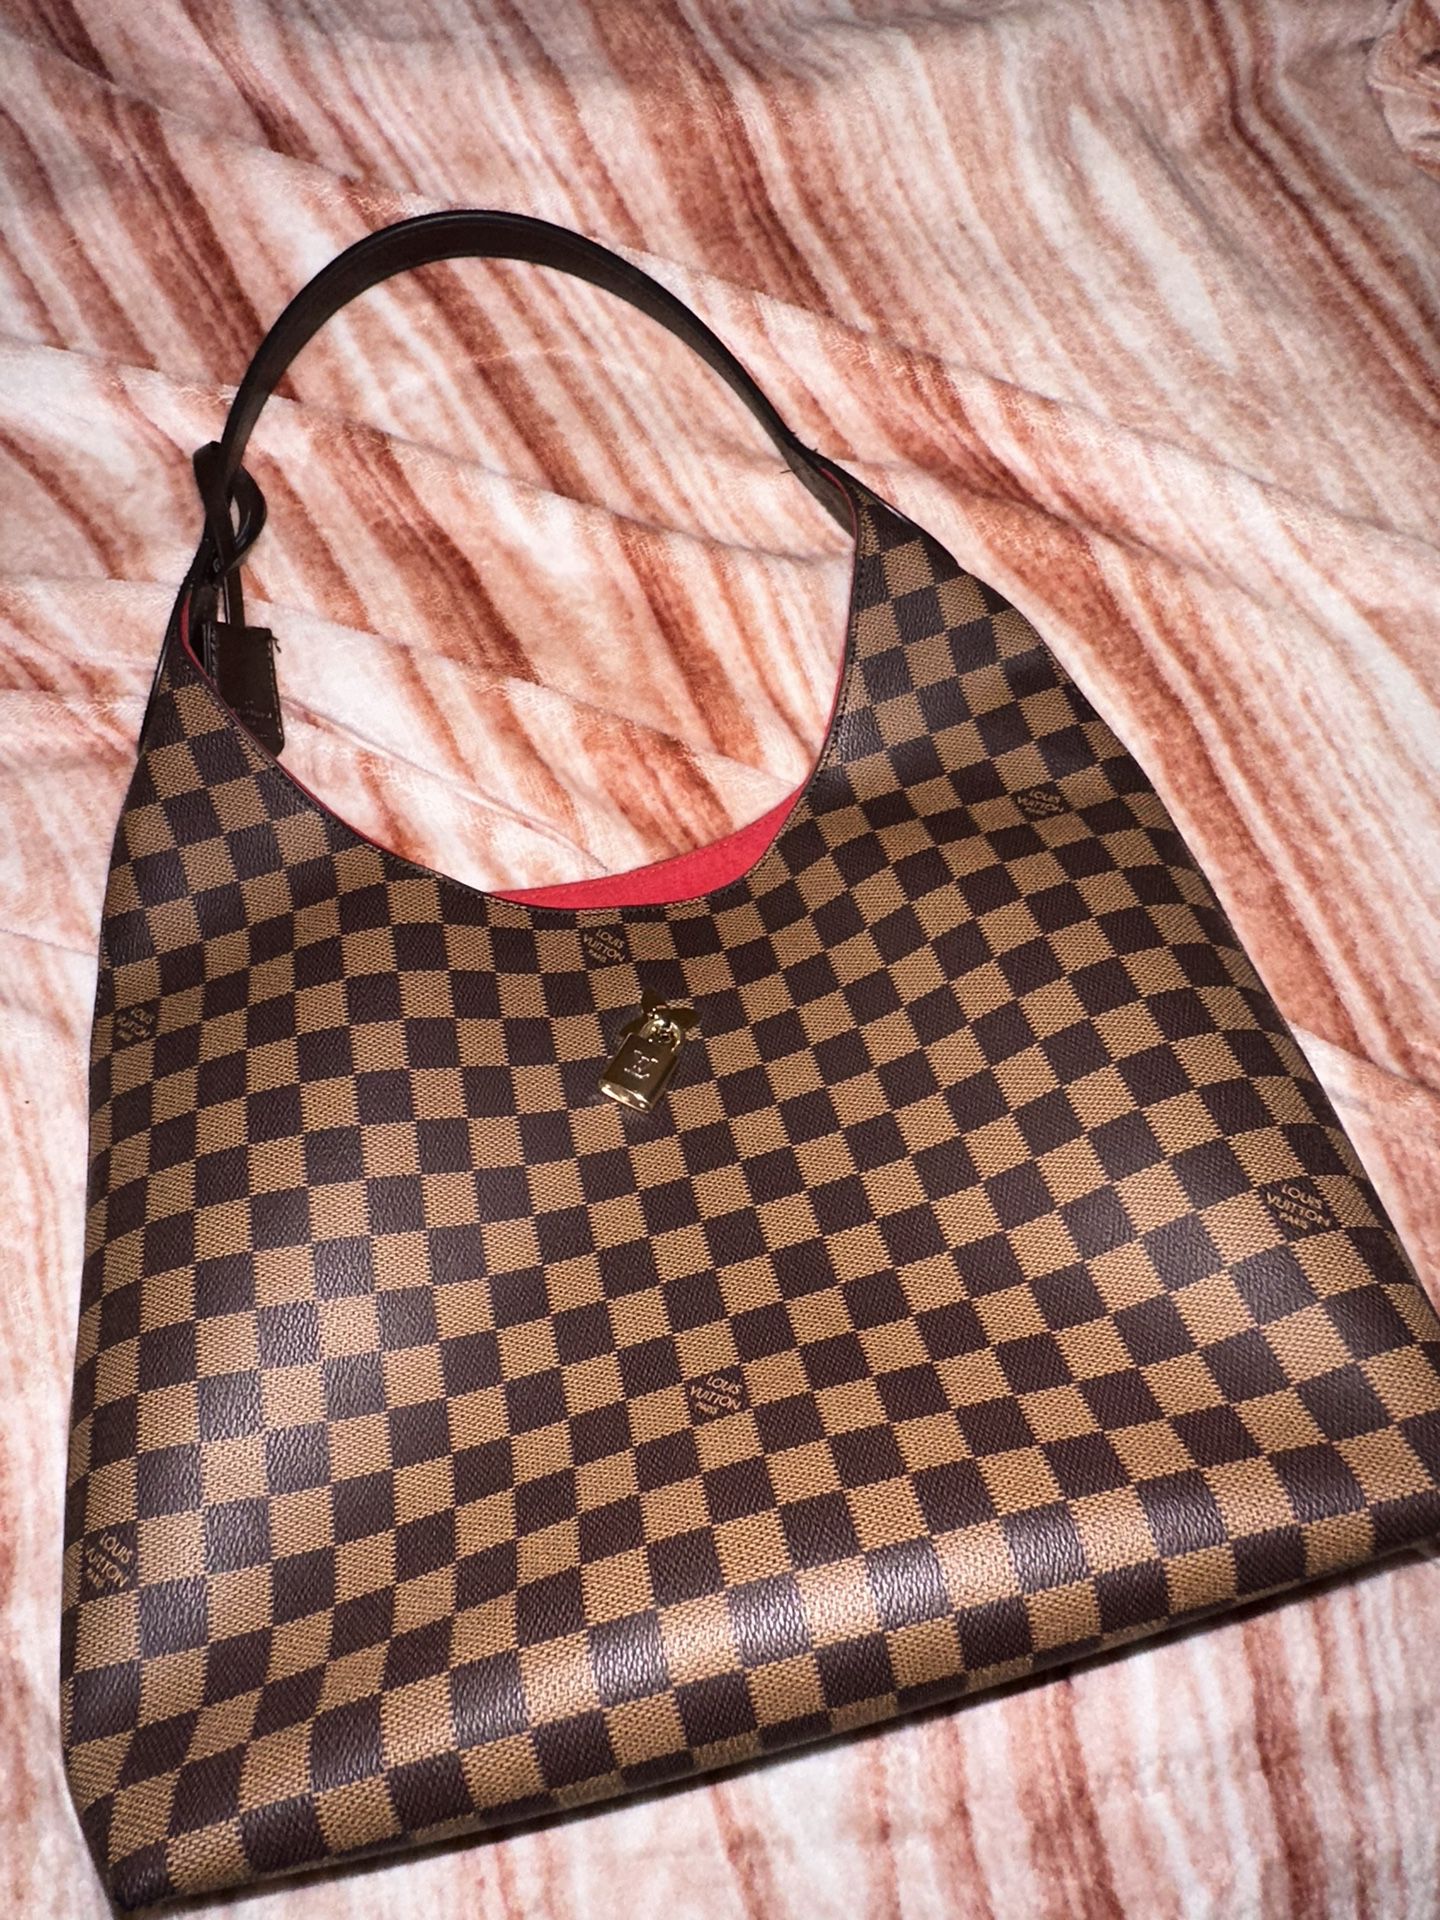 lv pattern purse